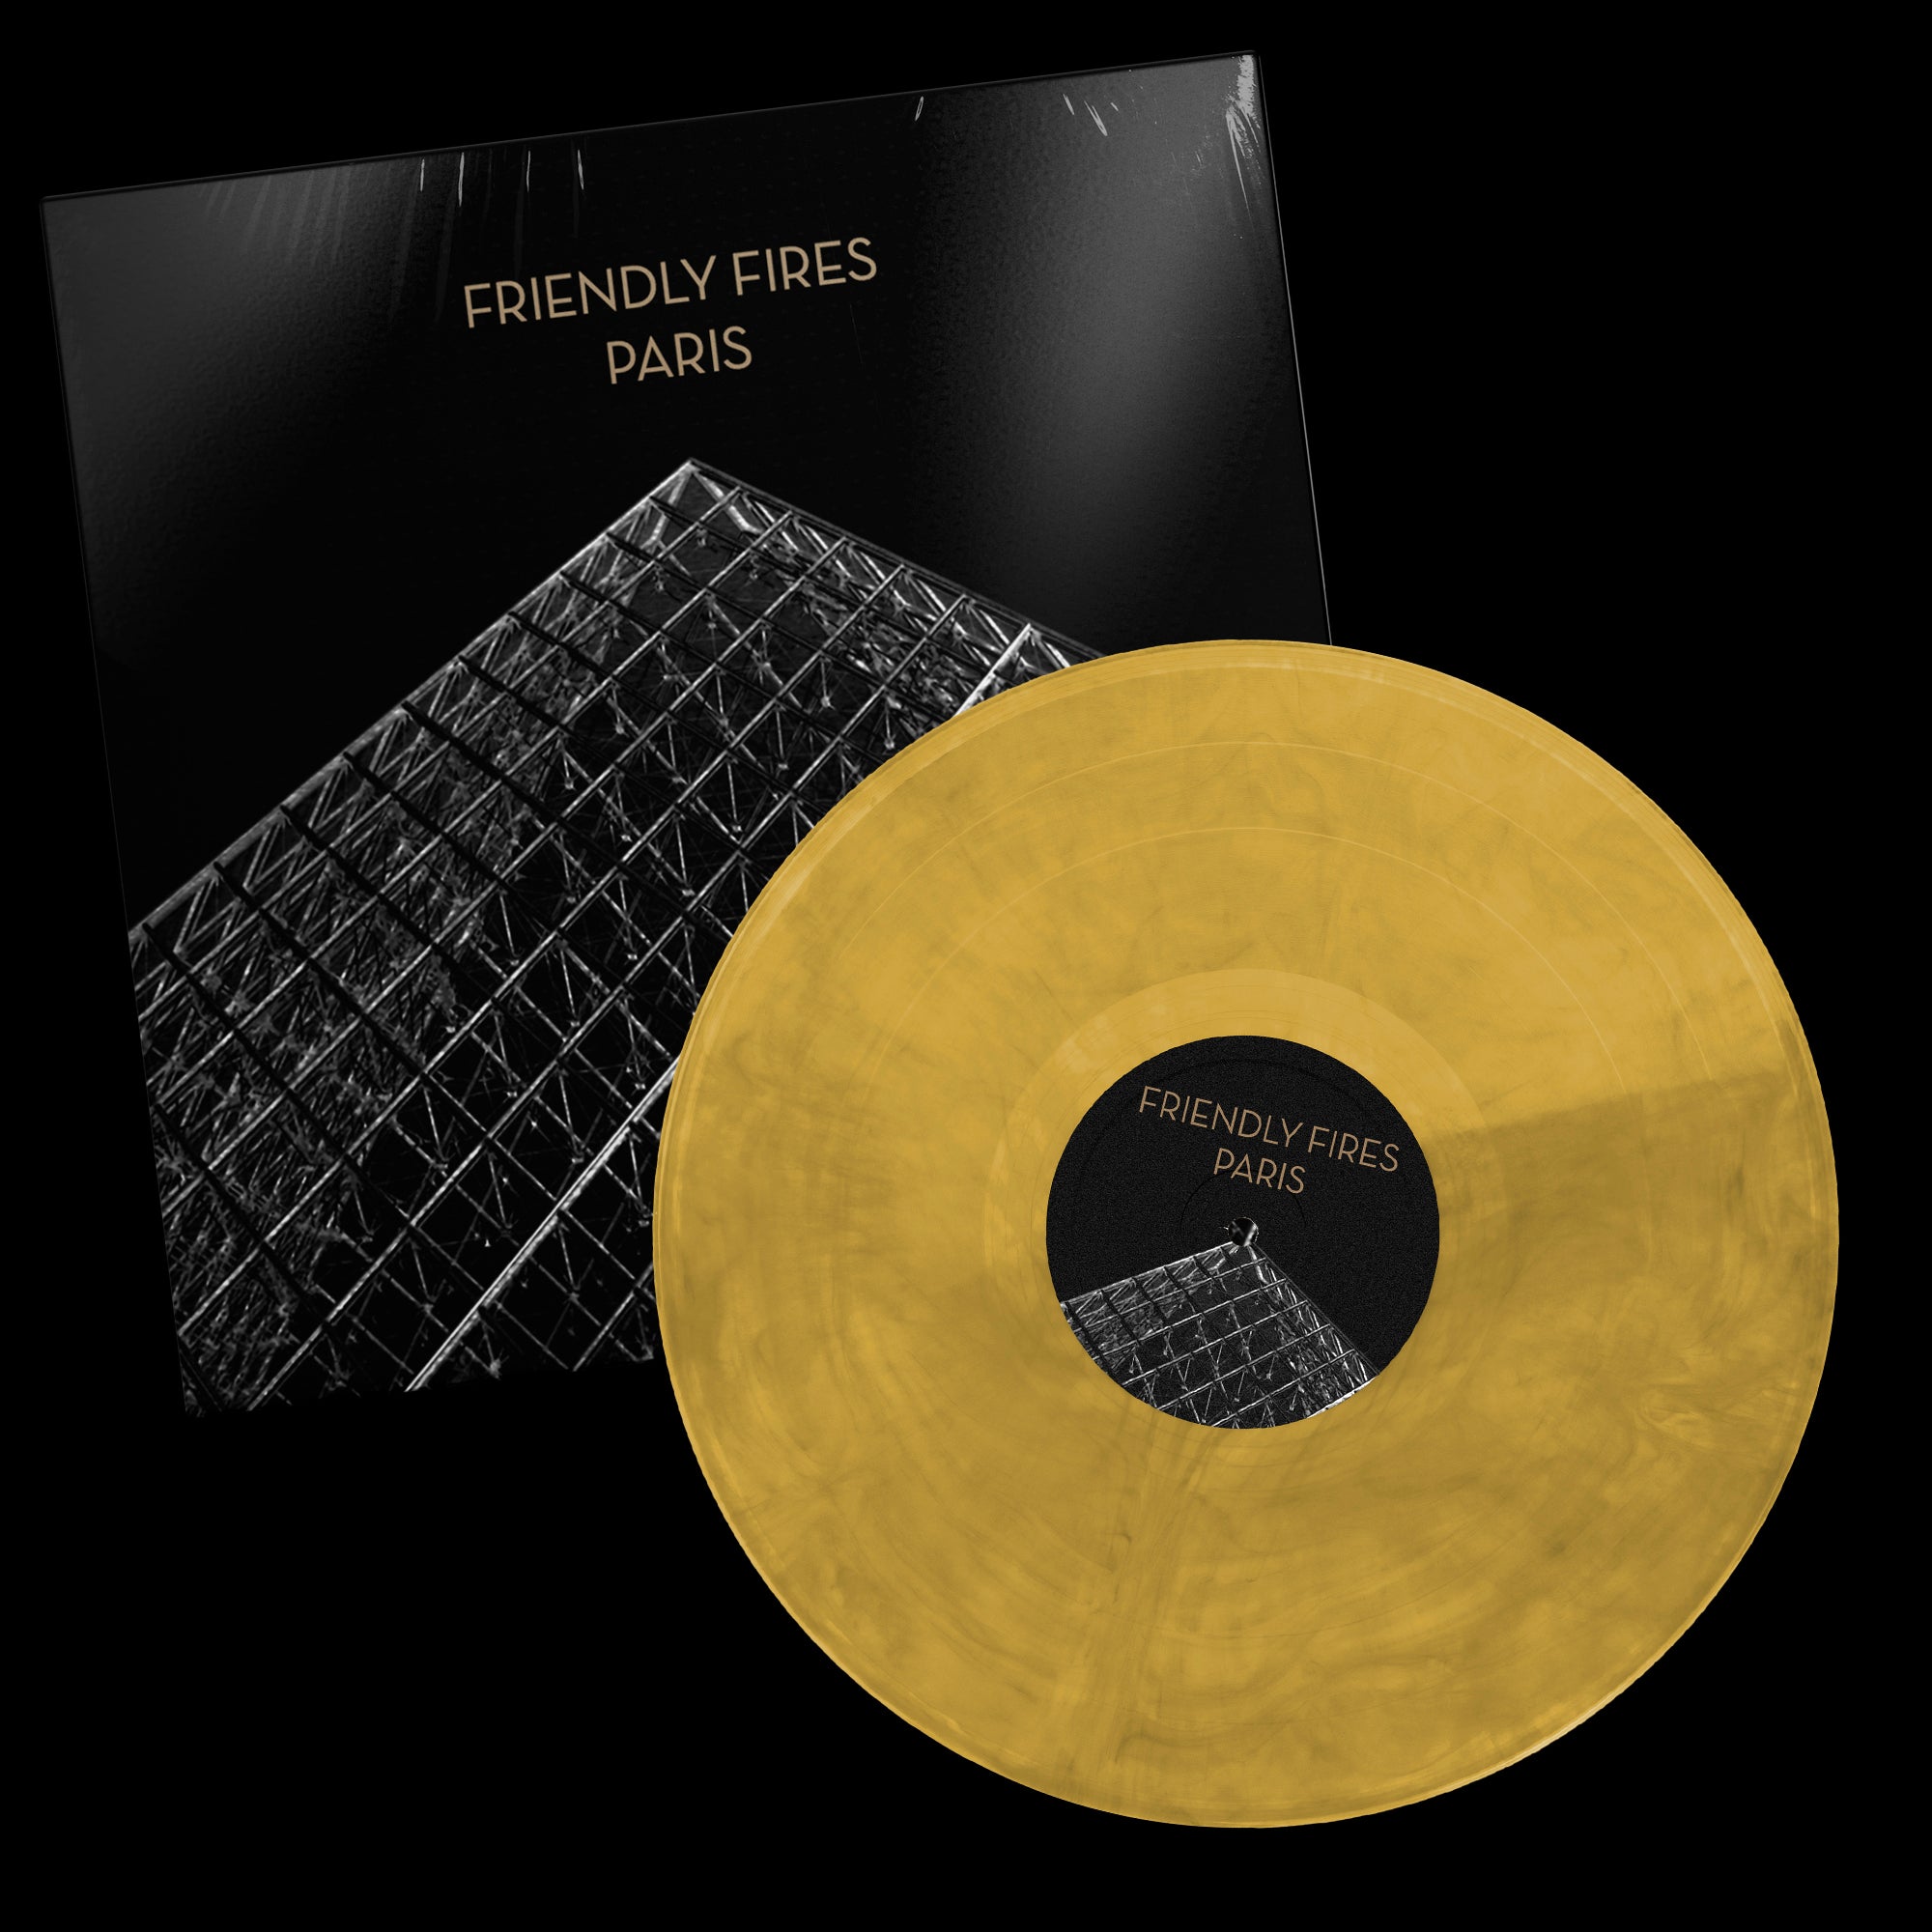 Paris (15th Anniversary Edition): Limited Gold Vinyl 12" Single